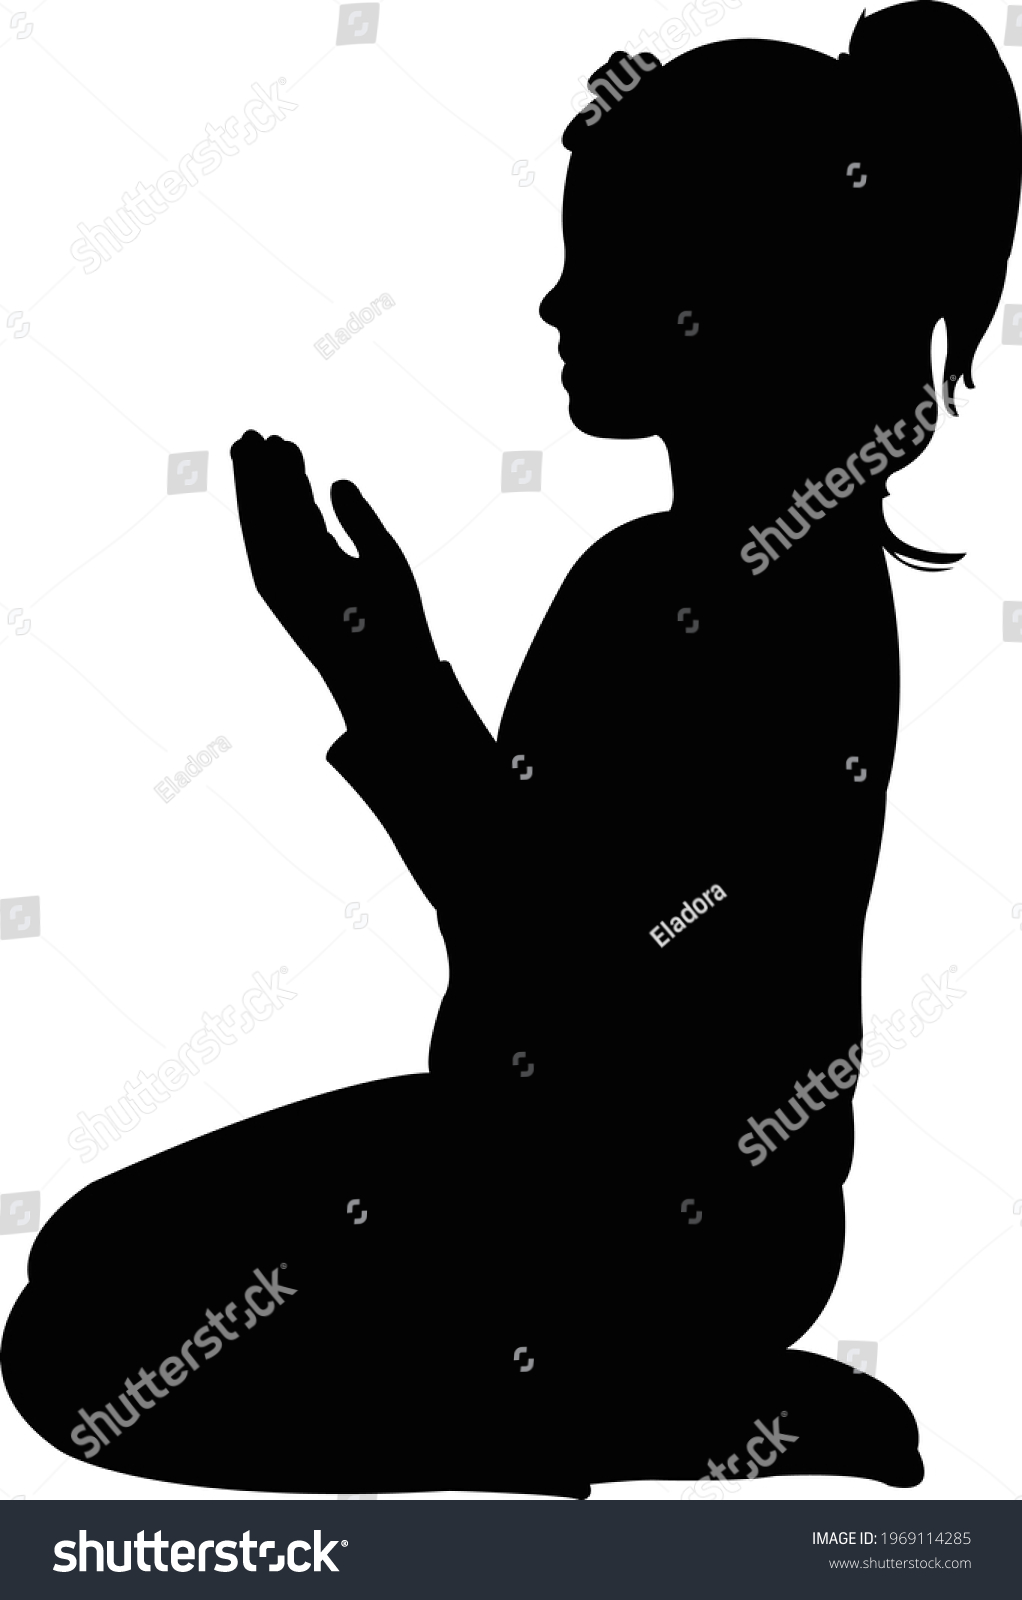 Girl Praying Silhouette Vector Stock Vector (Royalty Free) 1969114285 ...